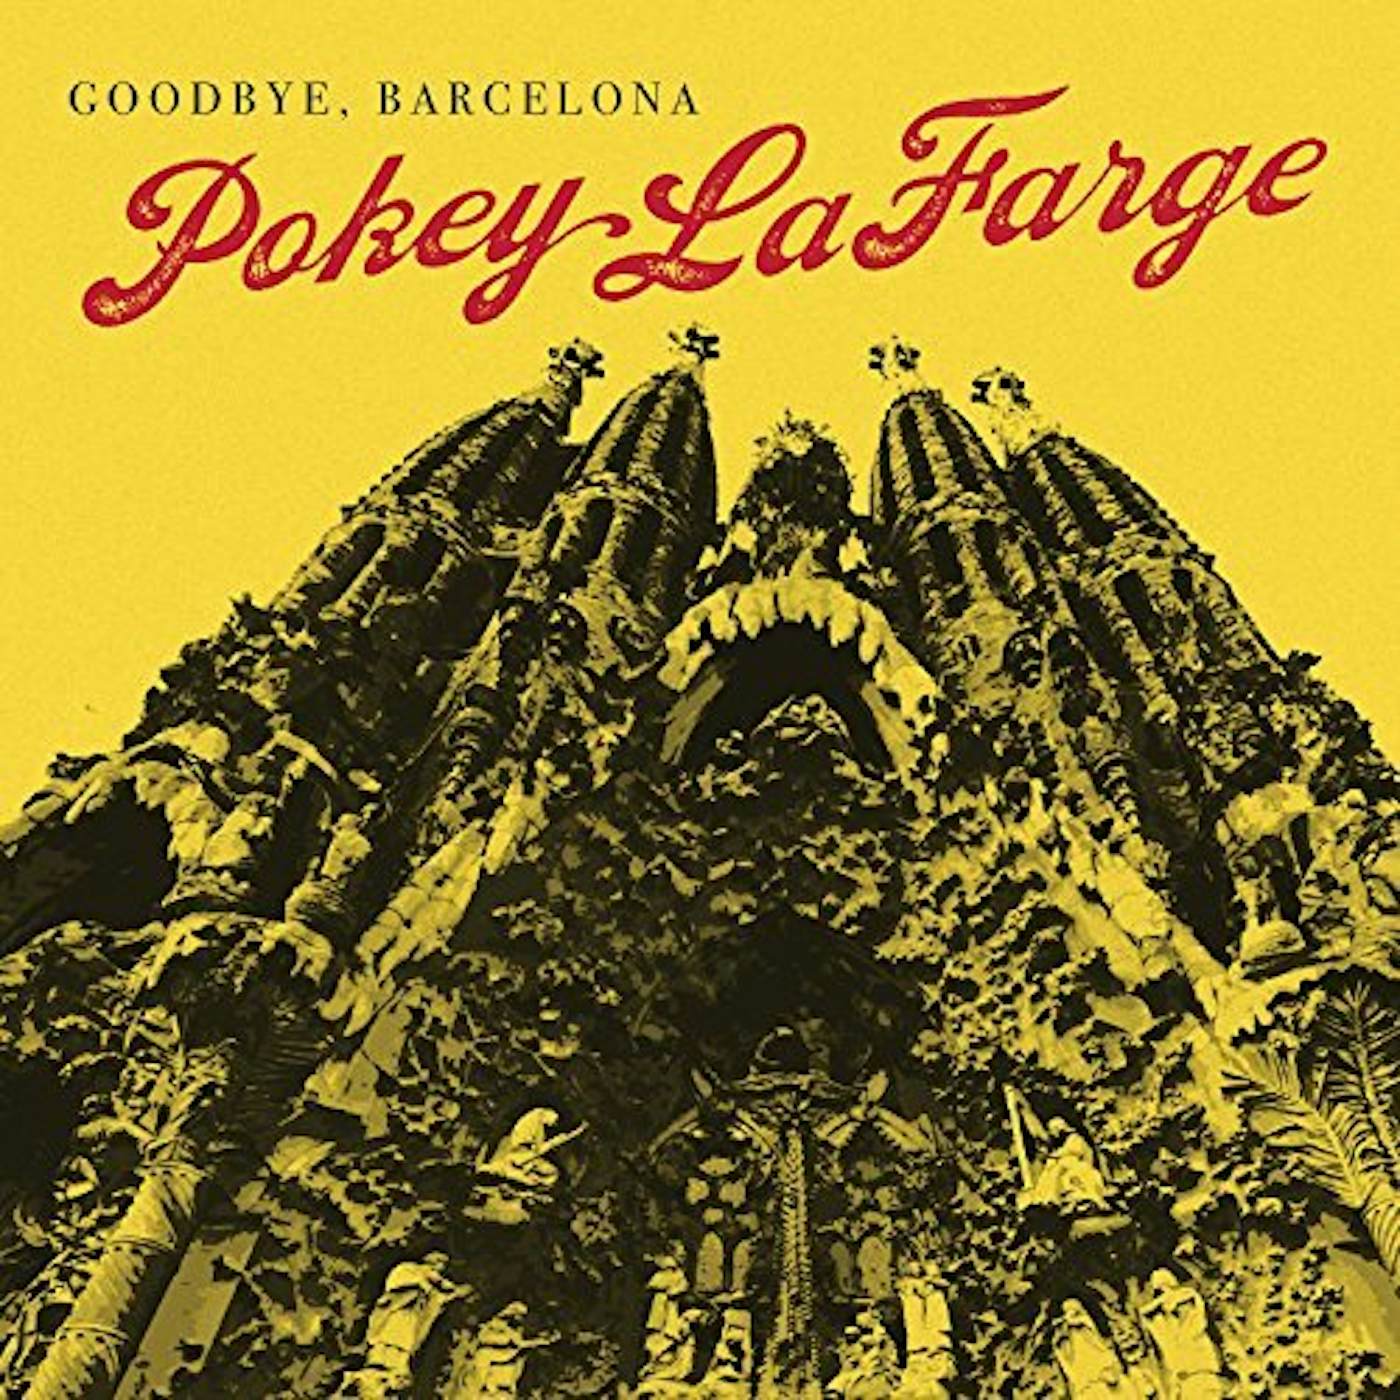 Pokey LaFarge GOODBYE BARCELONA Vinyl Record